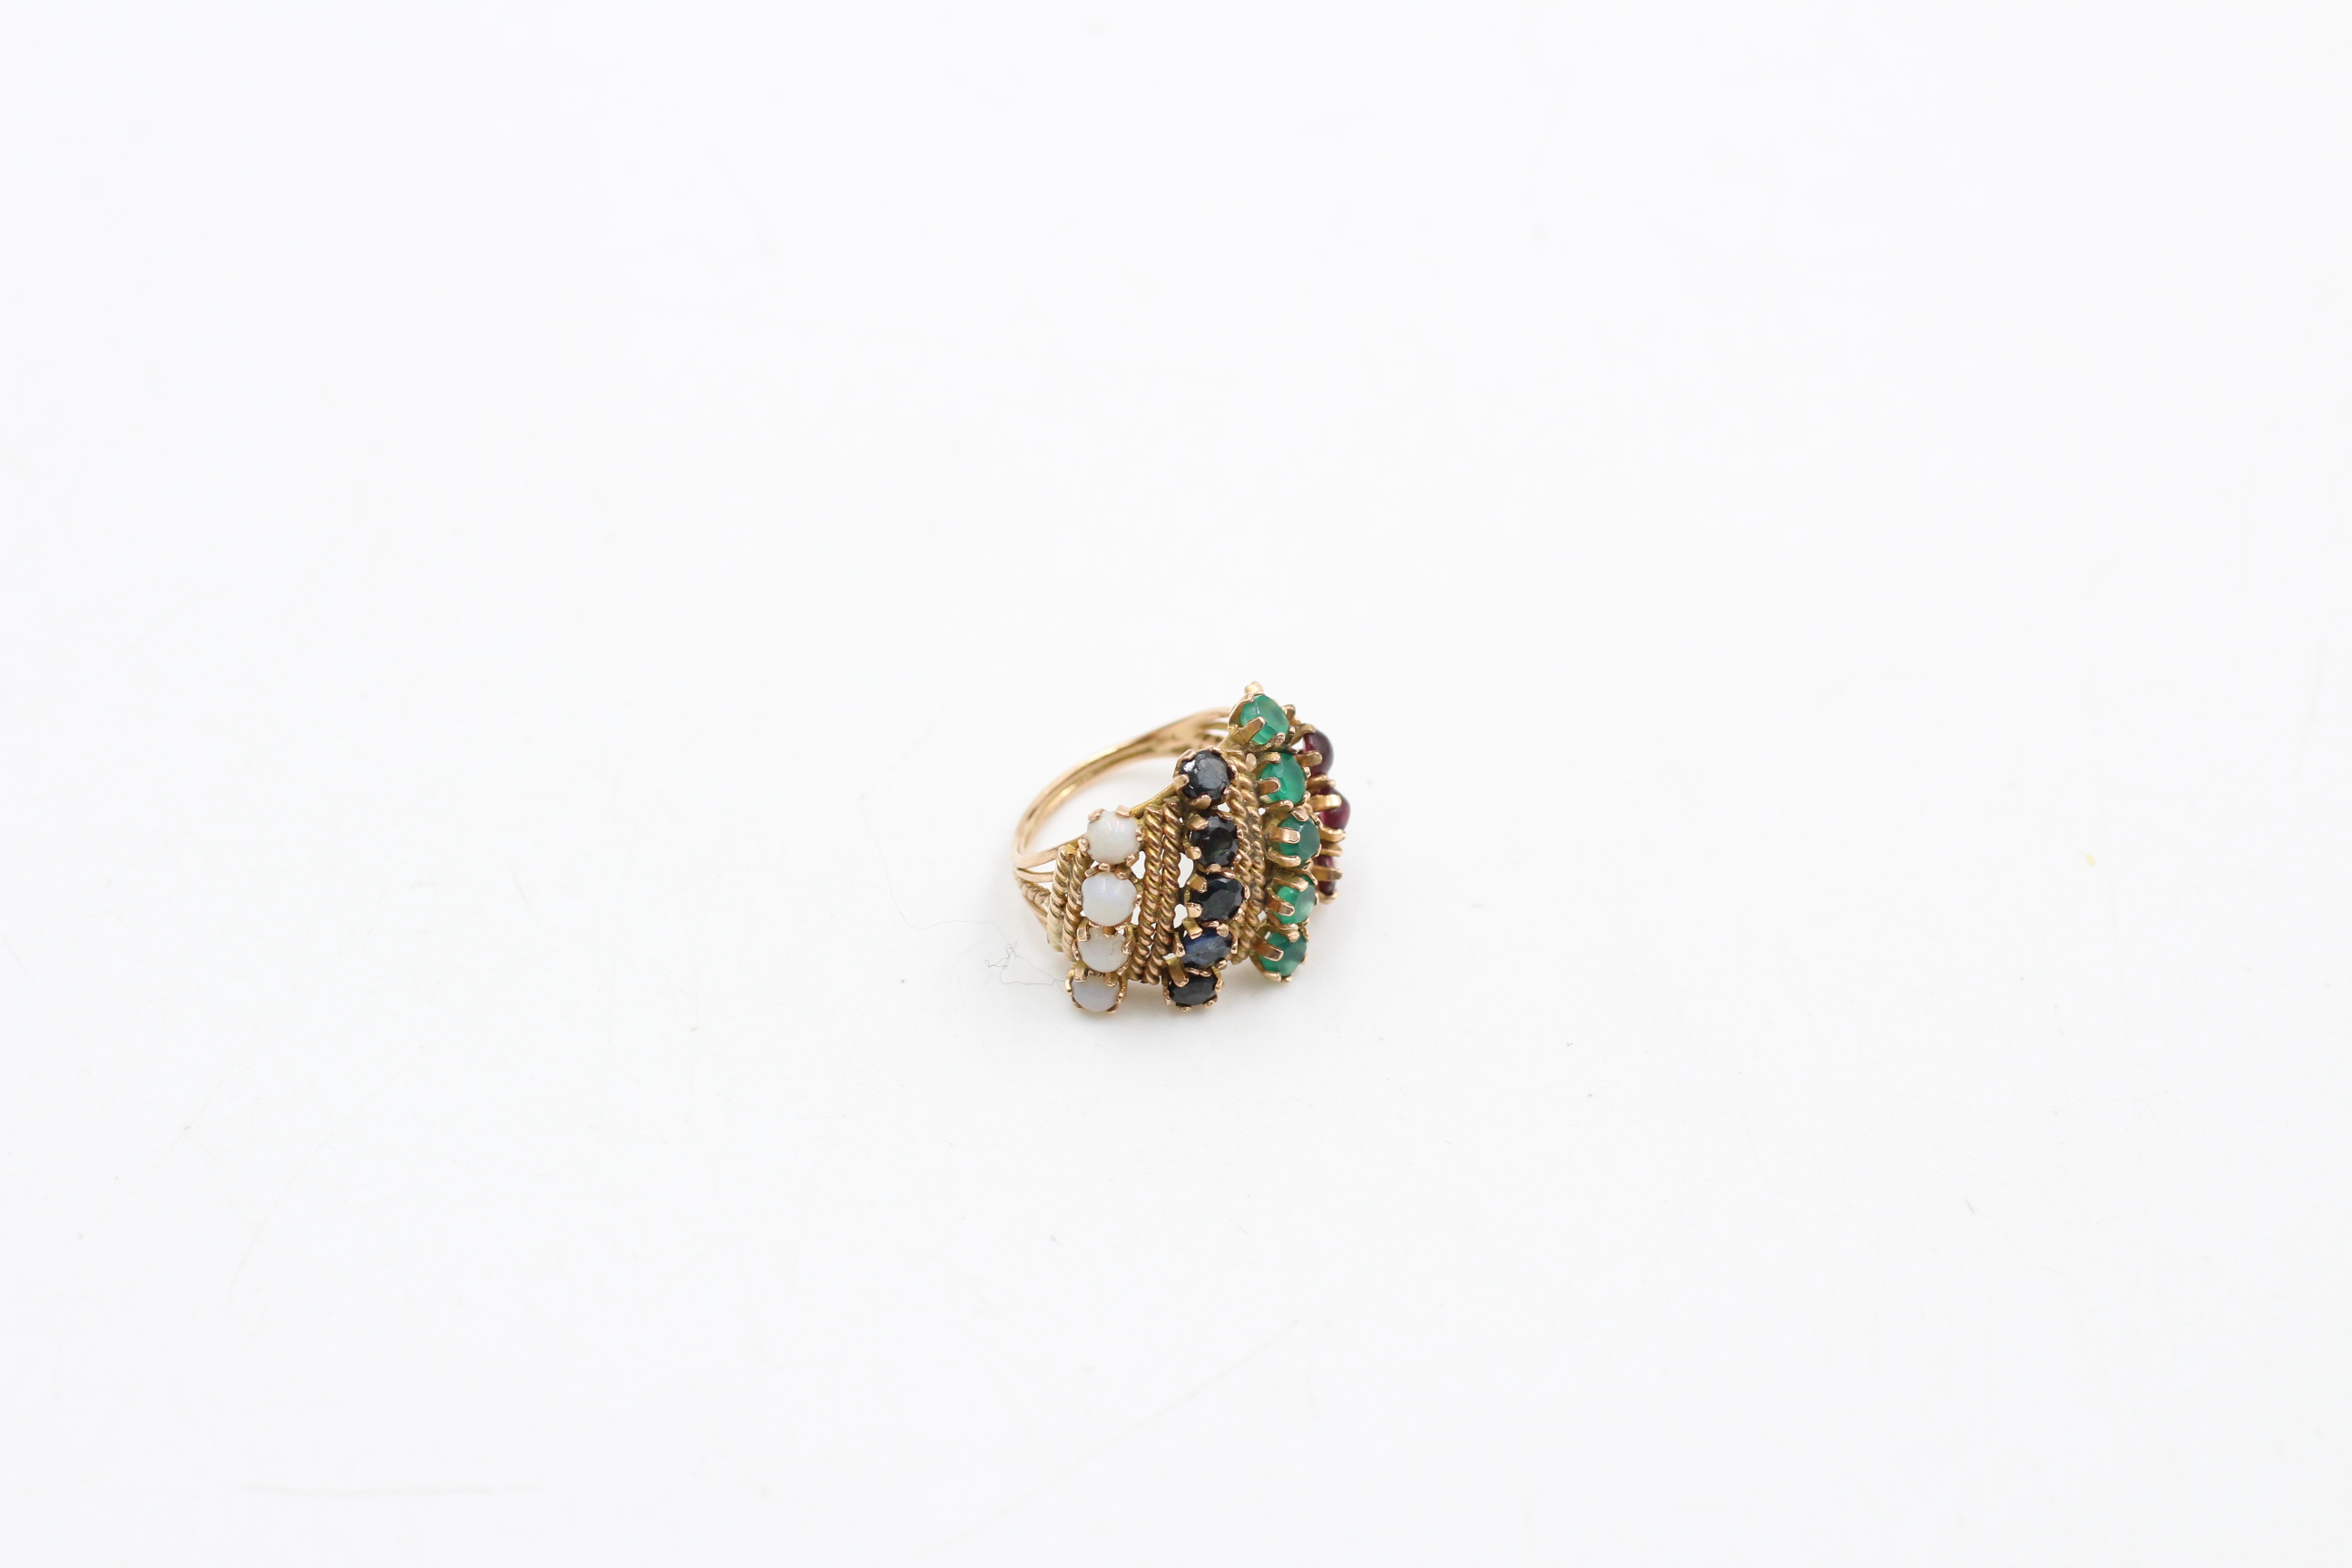 14ct gold opal, sapphire, chrysoprase & garnet dress ring (as seen) (4.6g) - Image 2 of 4